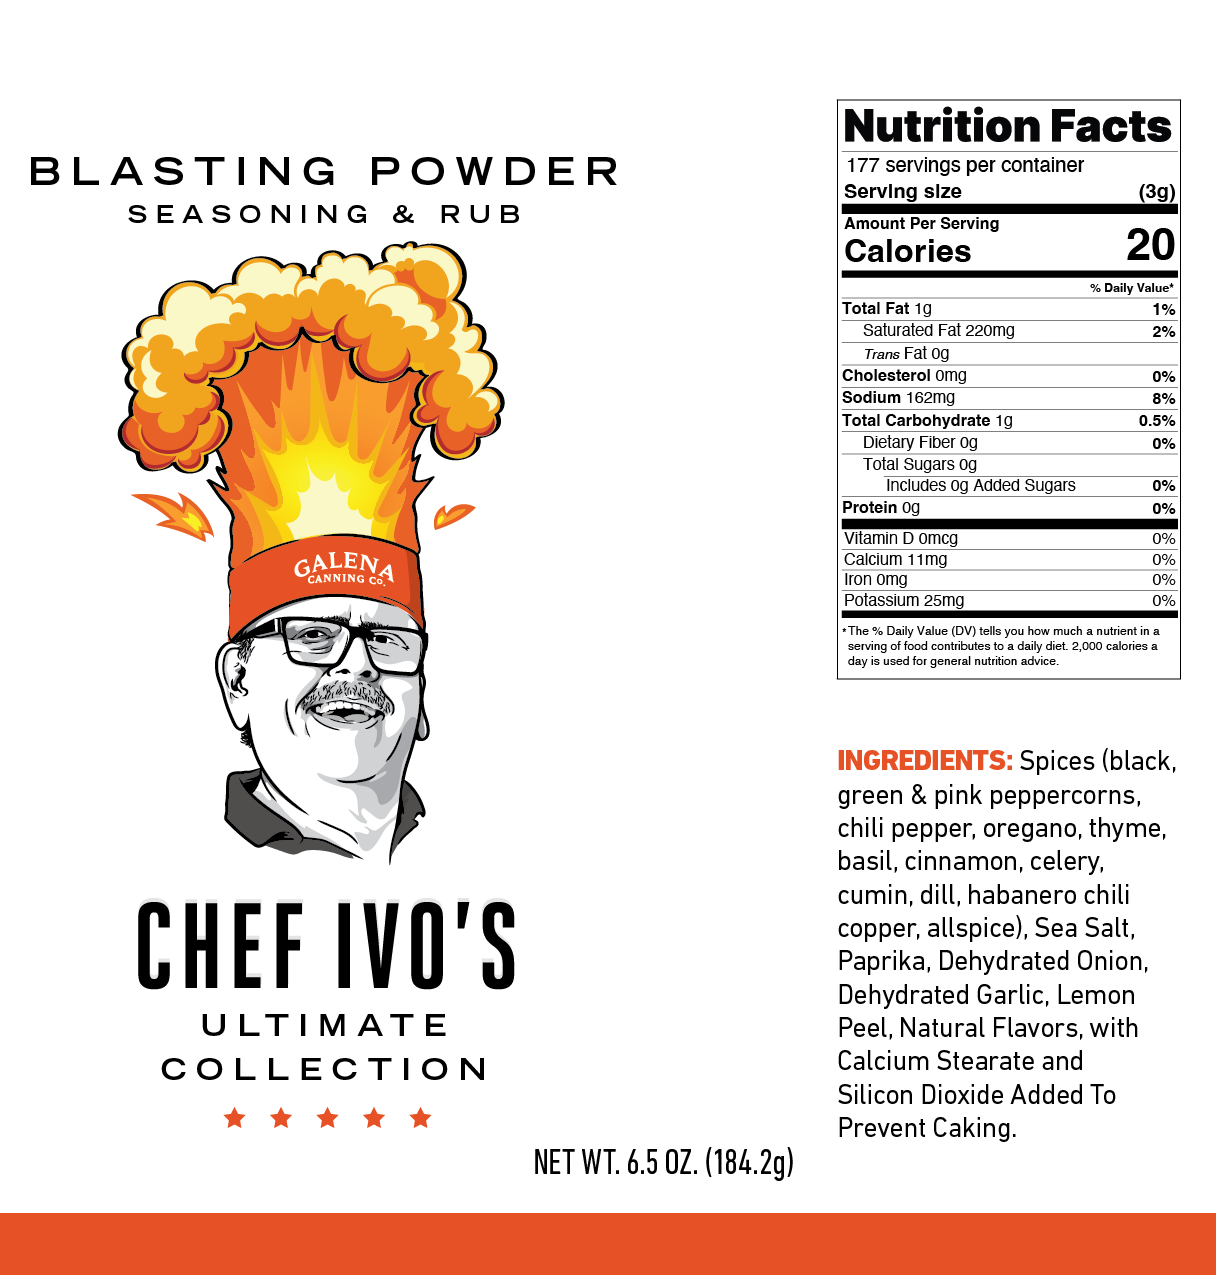 Chef Ivo's Ultimate Blasting Powder Seasoning and Rub